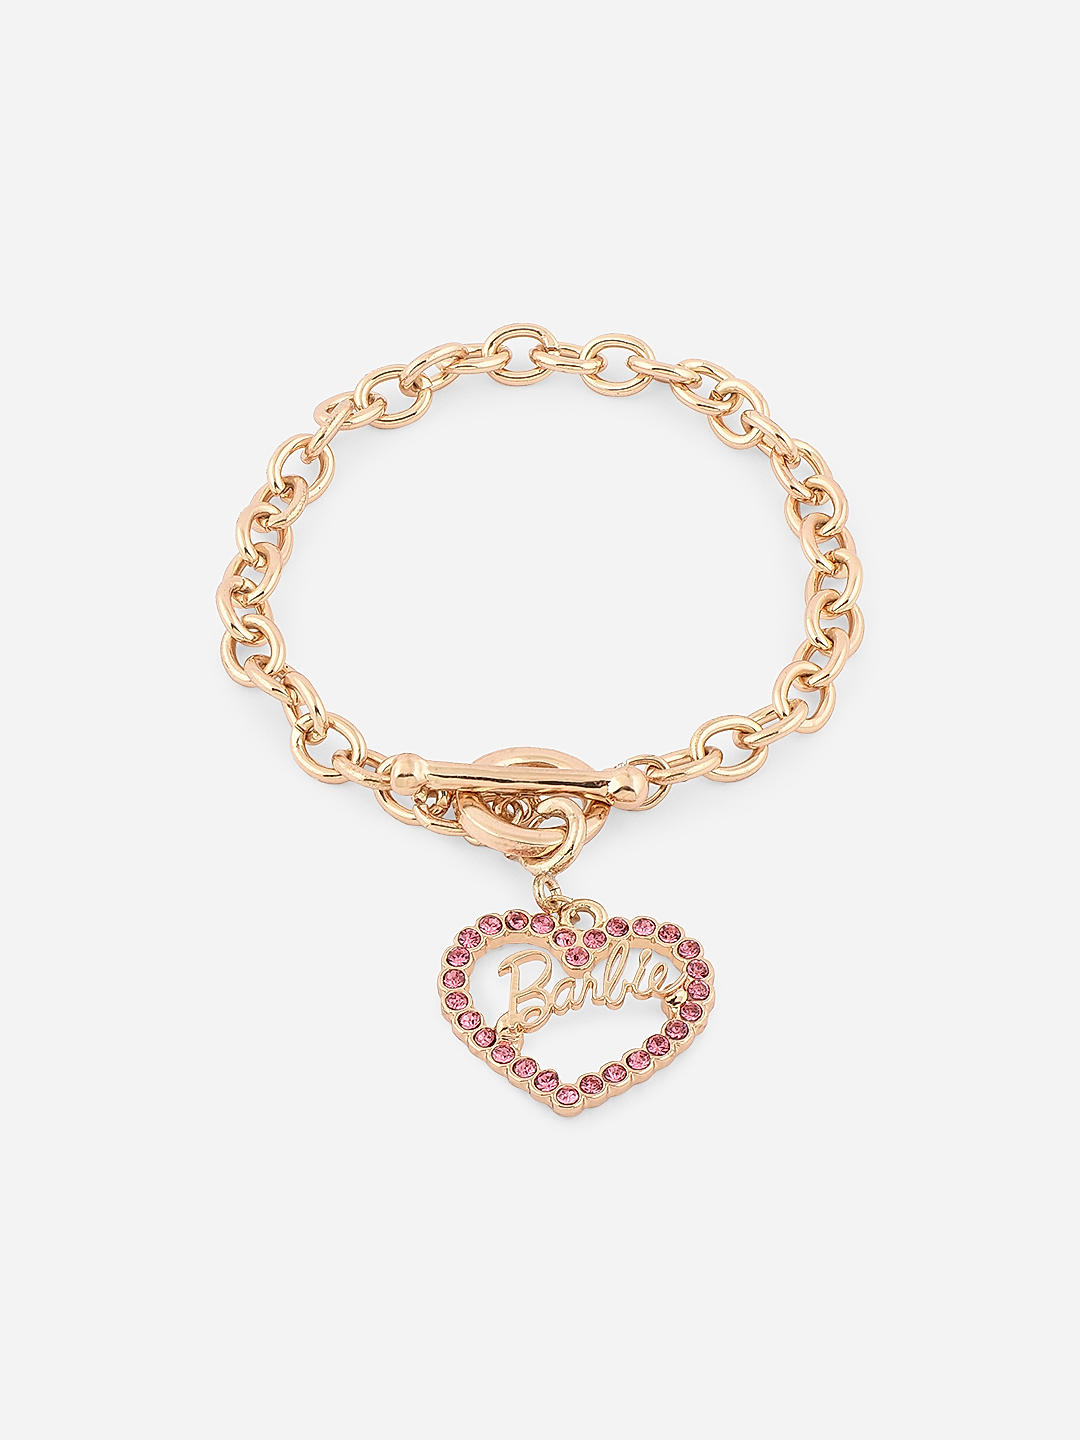 Tennis Deluxe bracelet, Round cut, White, Rose gold-tone plated | Swarovski